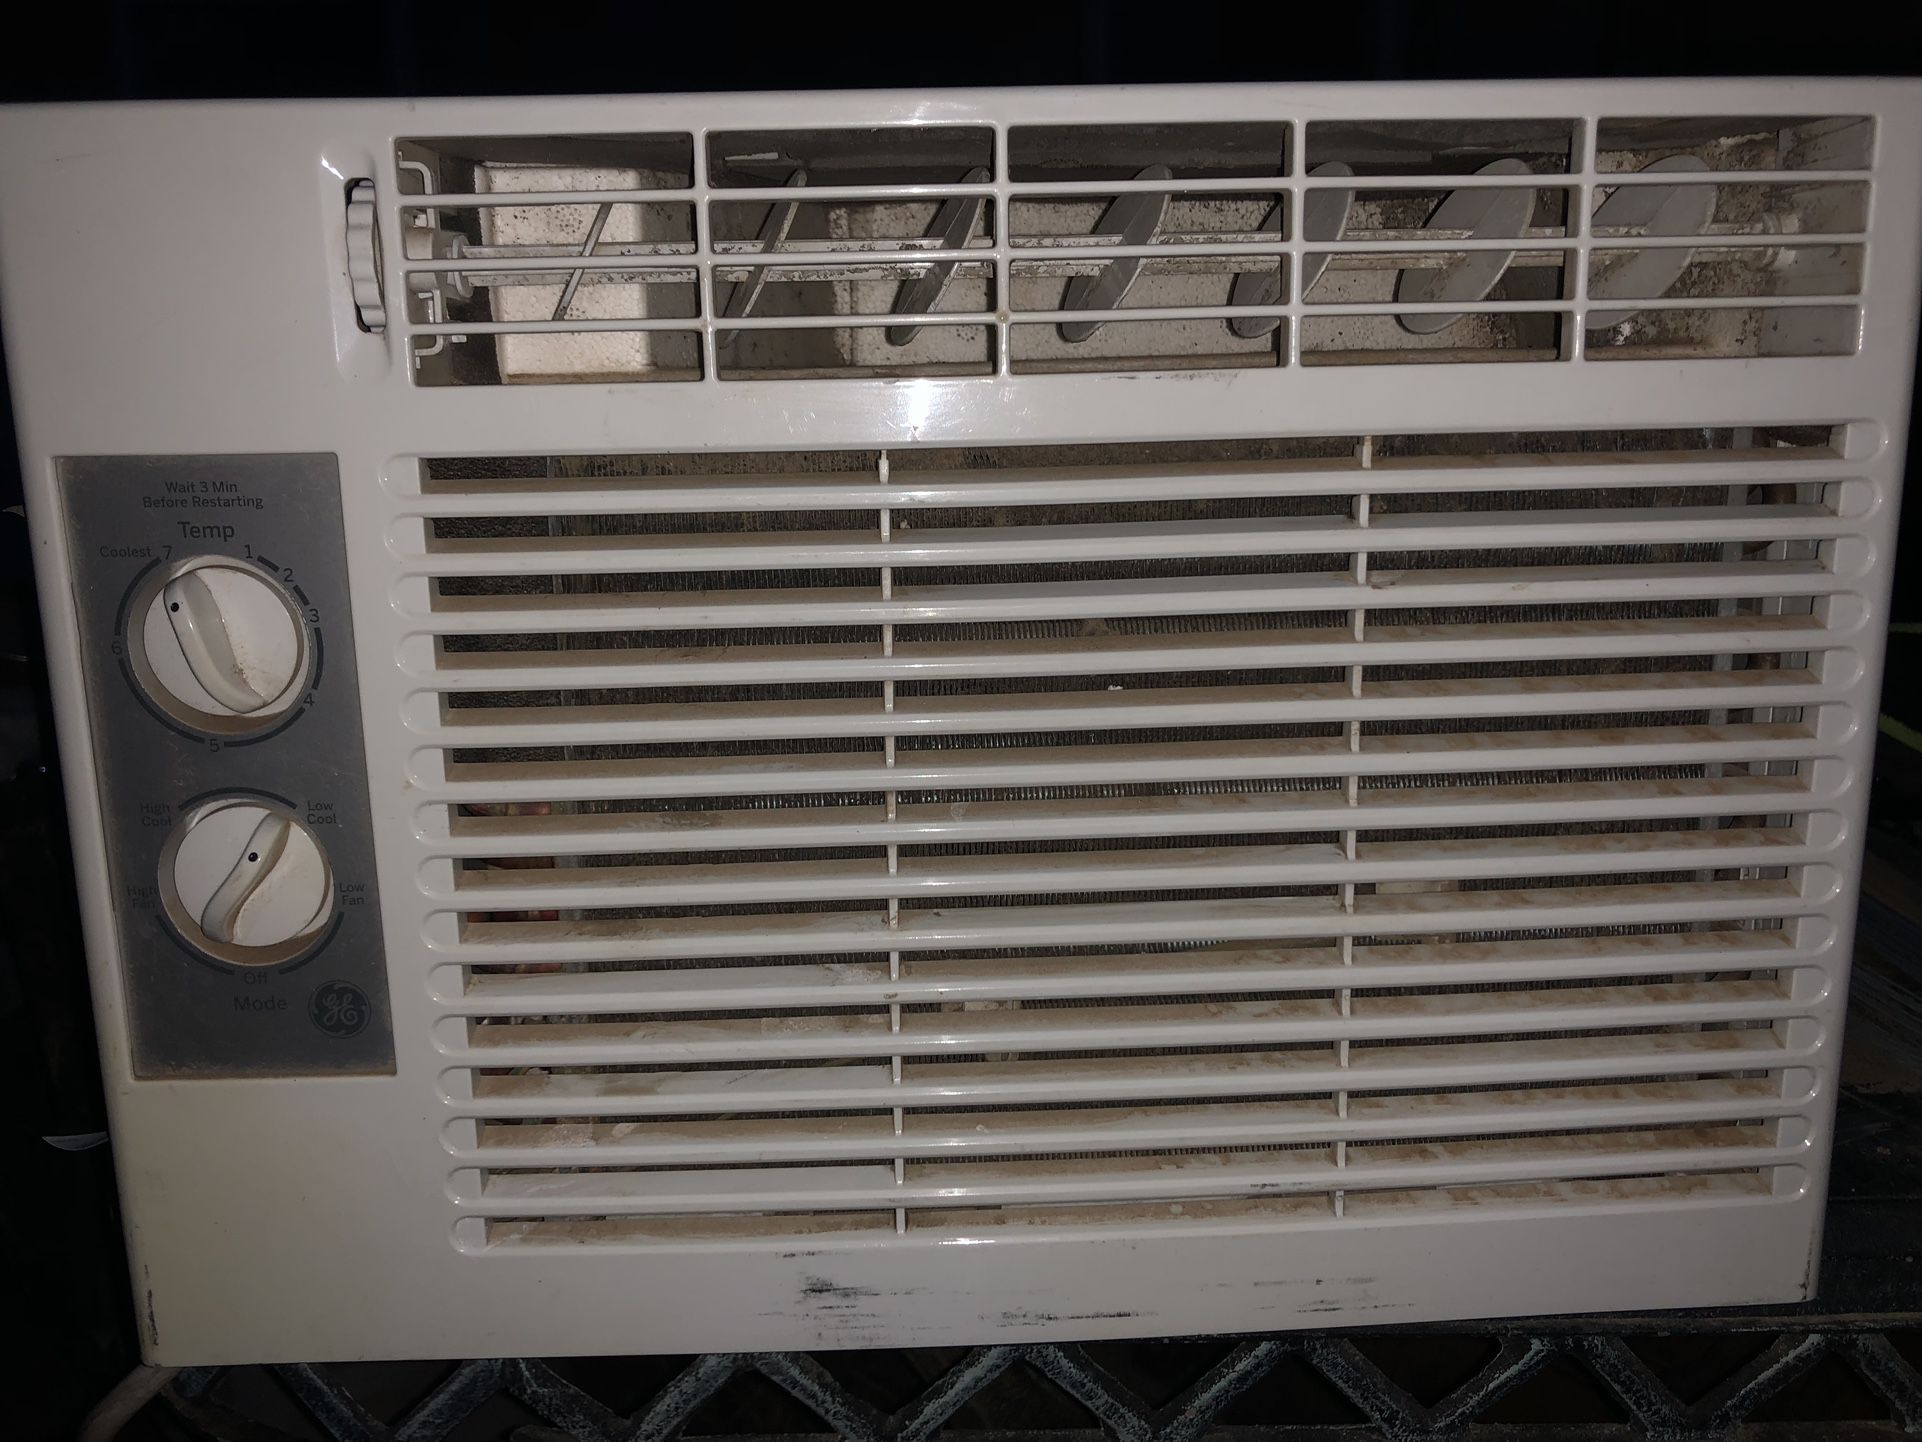 Windows Air Conditioners     BTU 5050